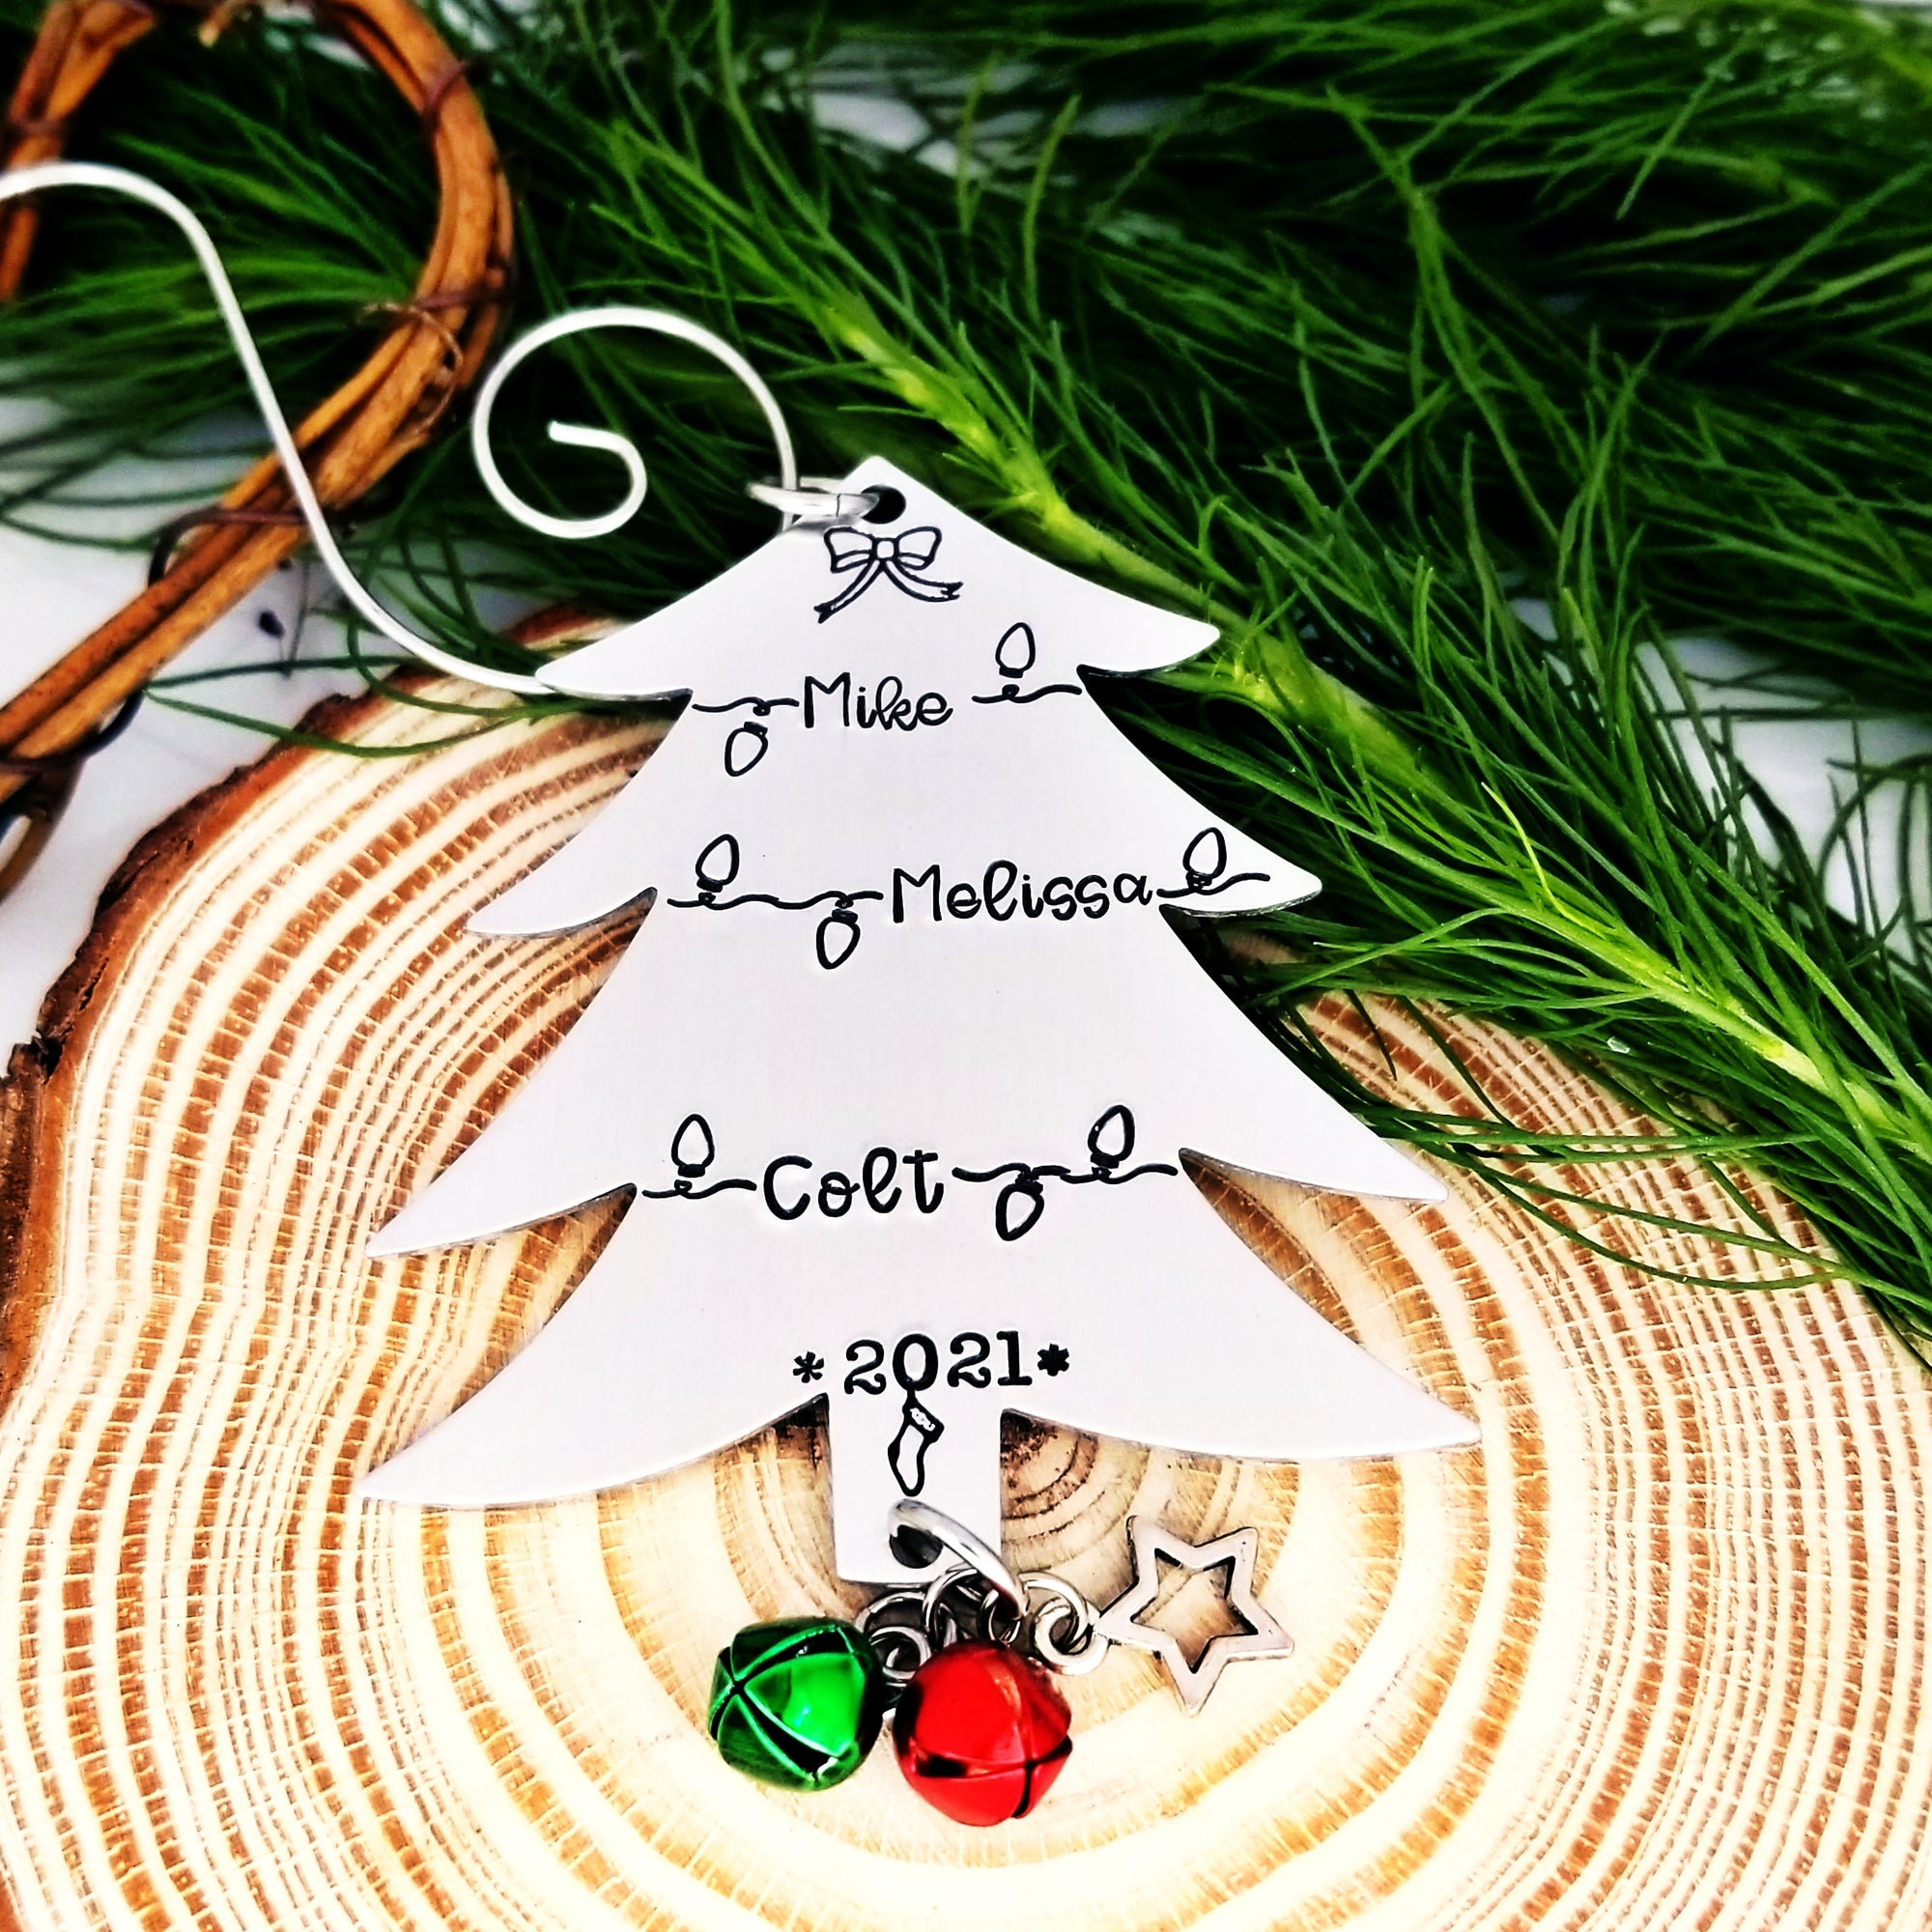 Yearly Family Christmas Ornament, Handmade Ornament, Personalized Christmas Ornament, Funny Ornament Gift